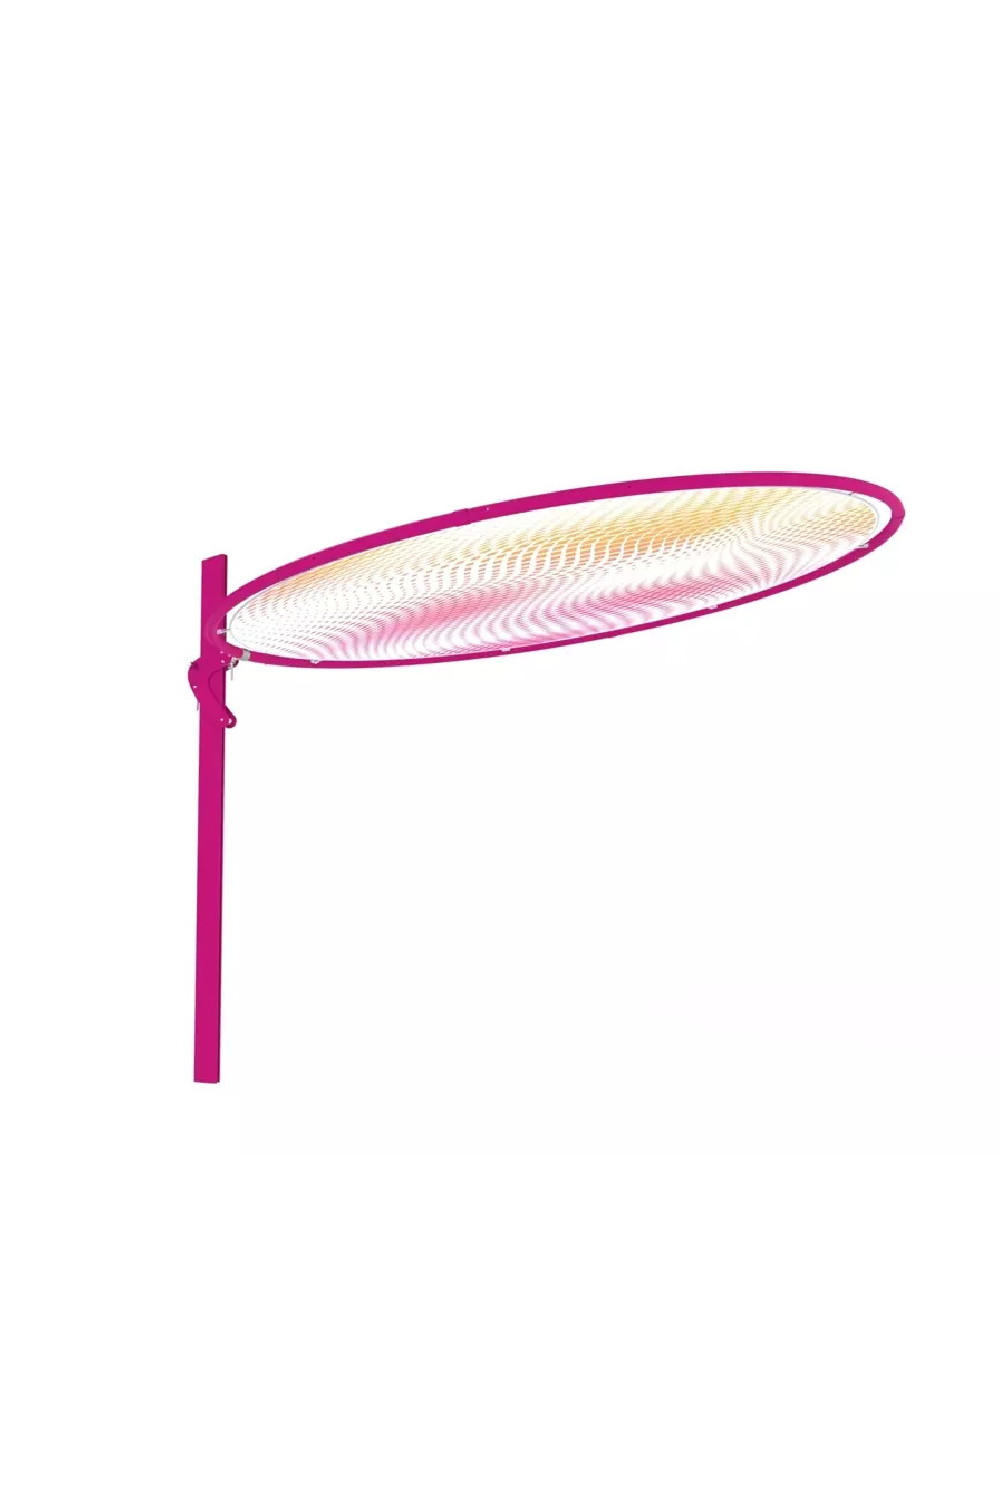 Sleek Round Pink Parasol (9'10") | Umbrosa Eclipsum UX by Karim Rashid | Oroa.com